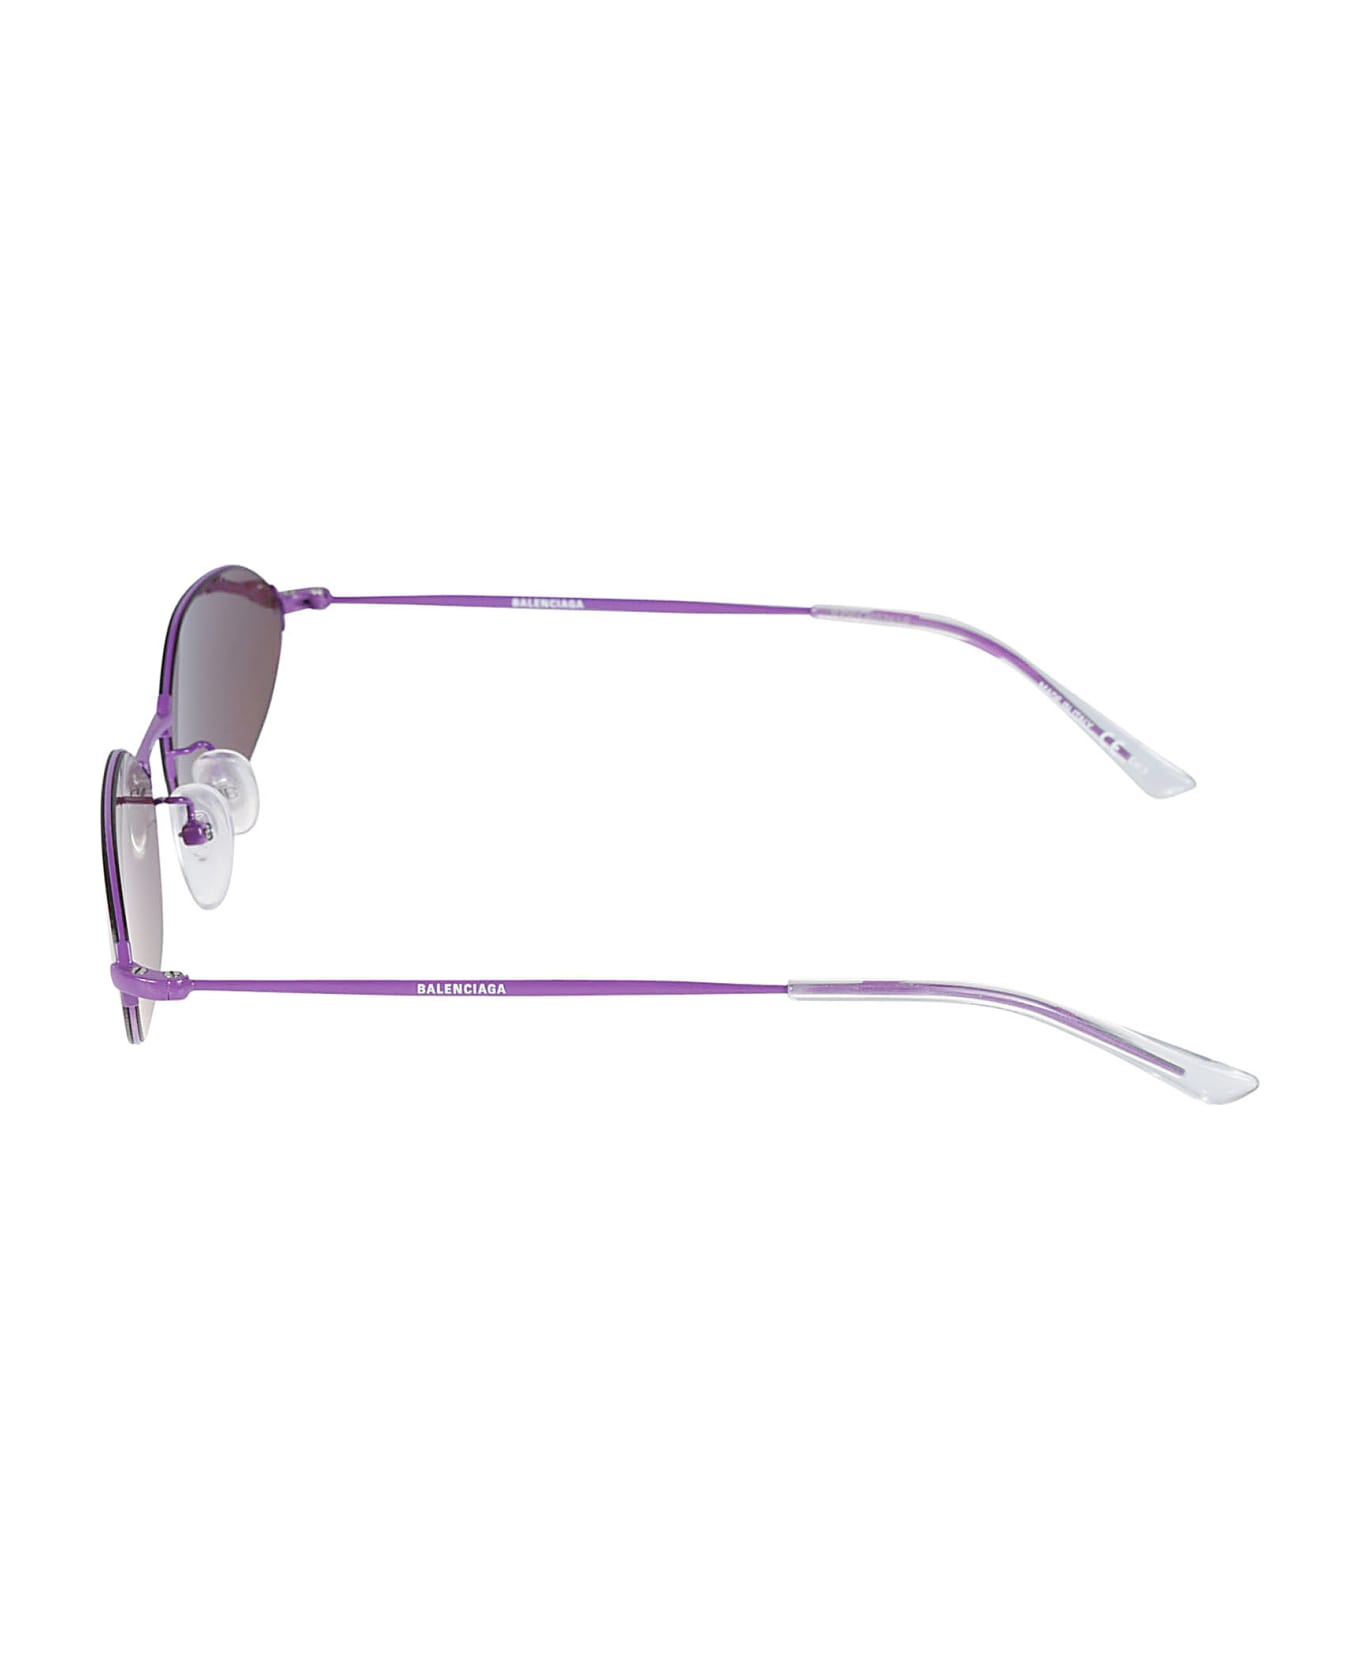 Balenciaga Eyewear Logo Frame Briranyth Sunglasses - Violet